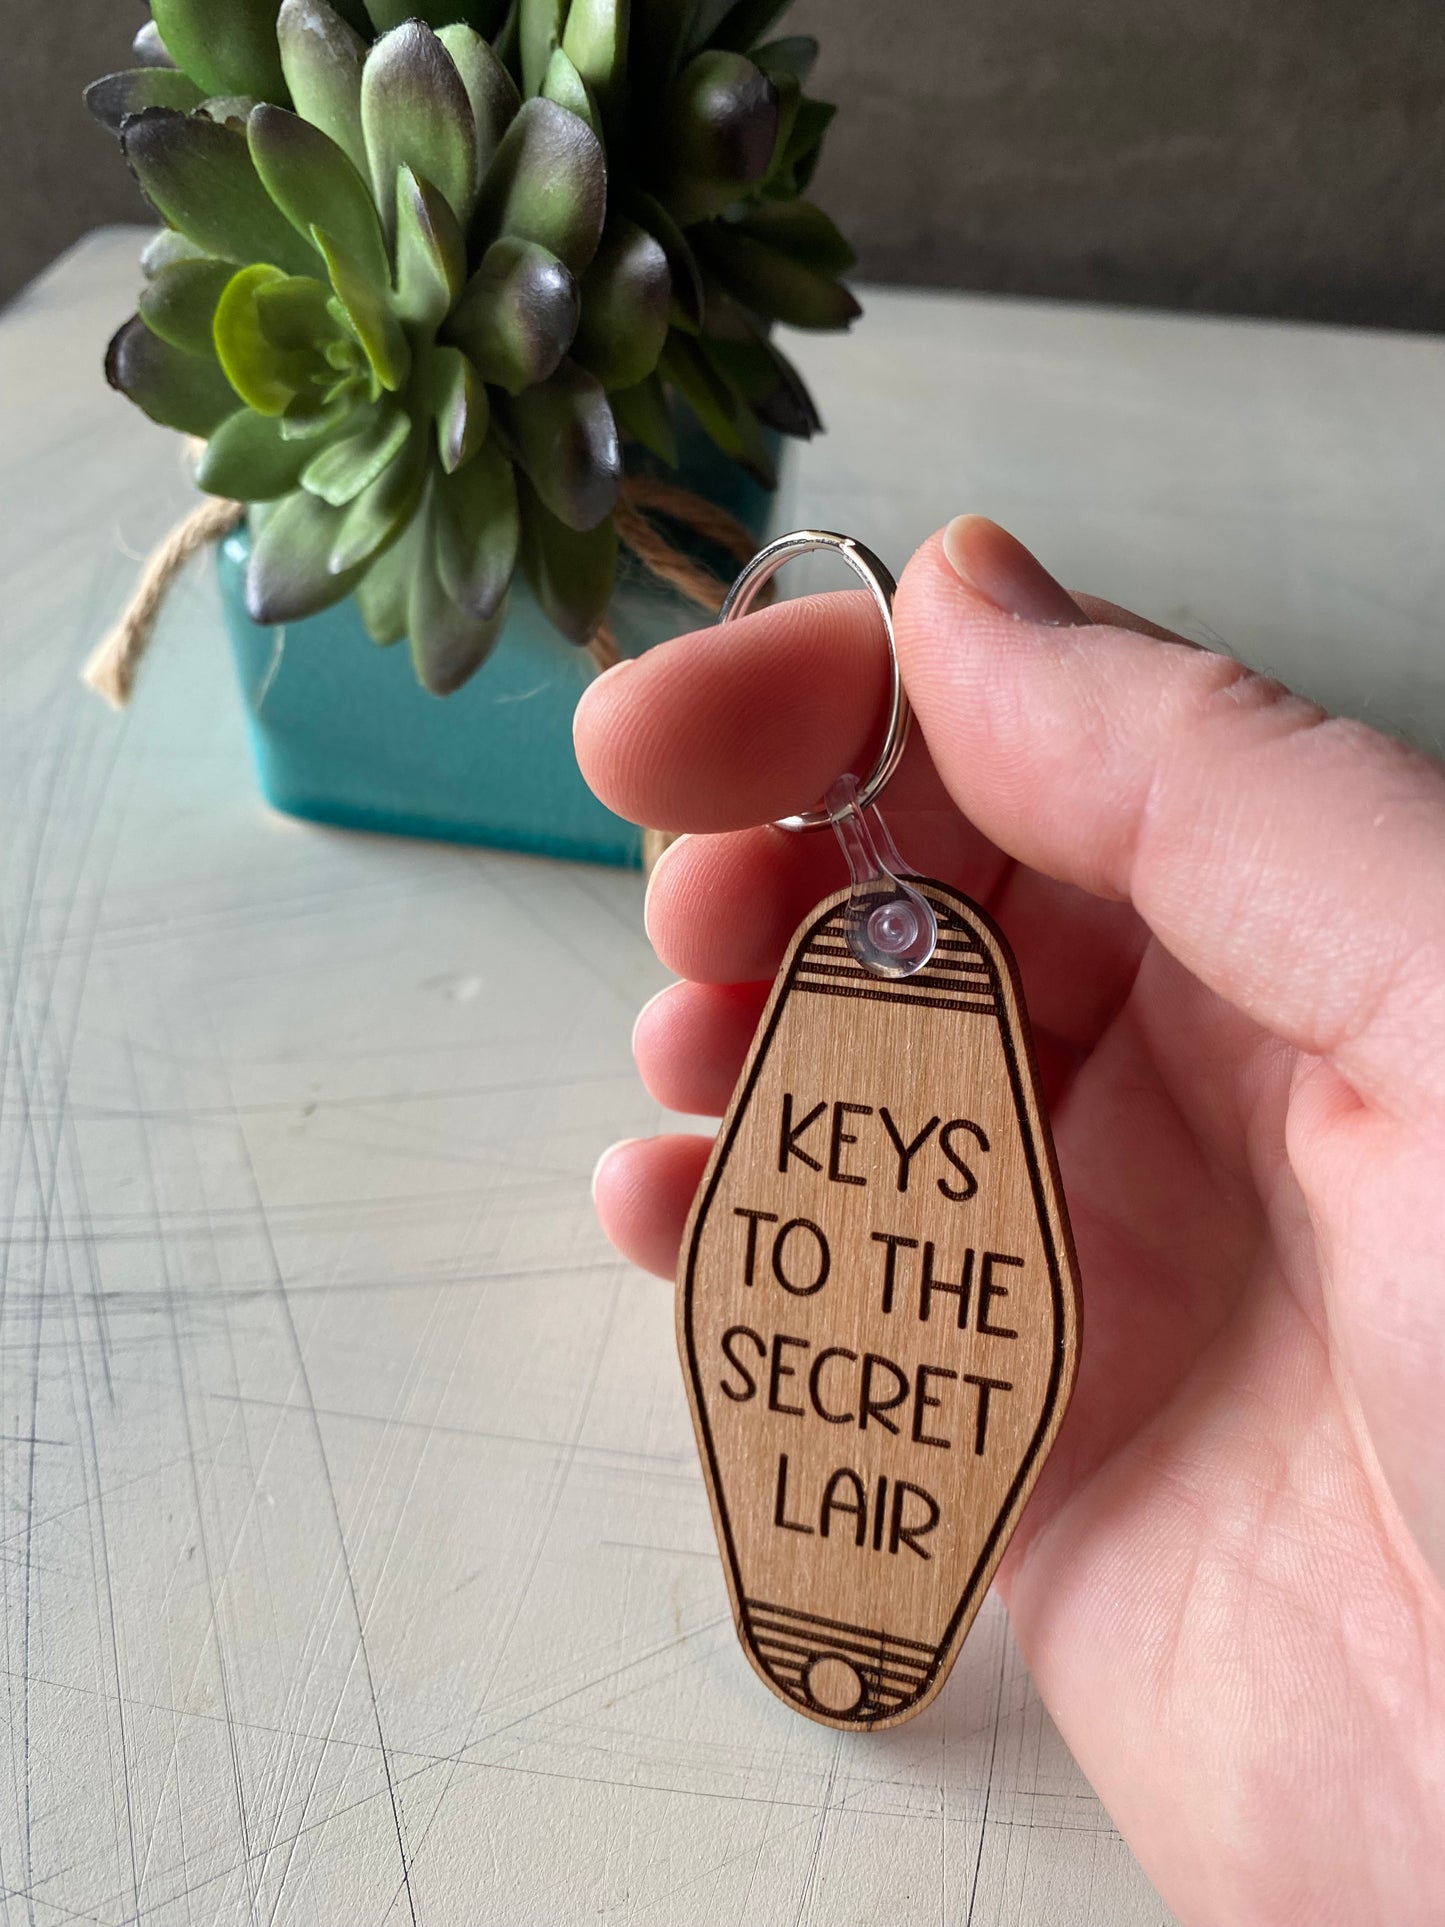 Keys to the Secret Lair - wood keychain - Novotny Designs - motel style keychain